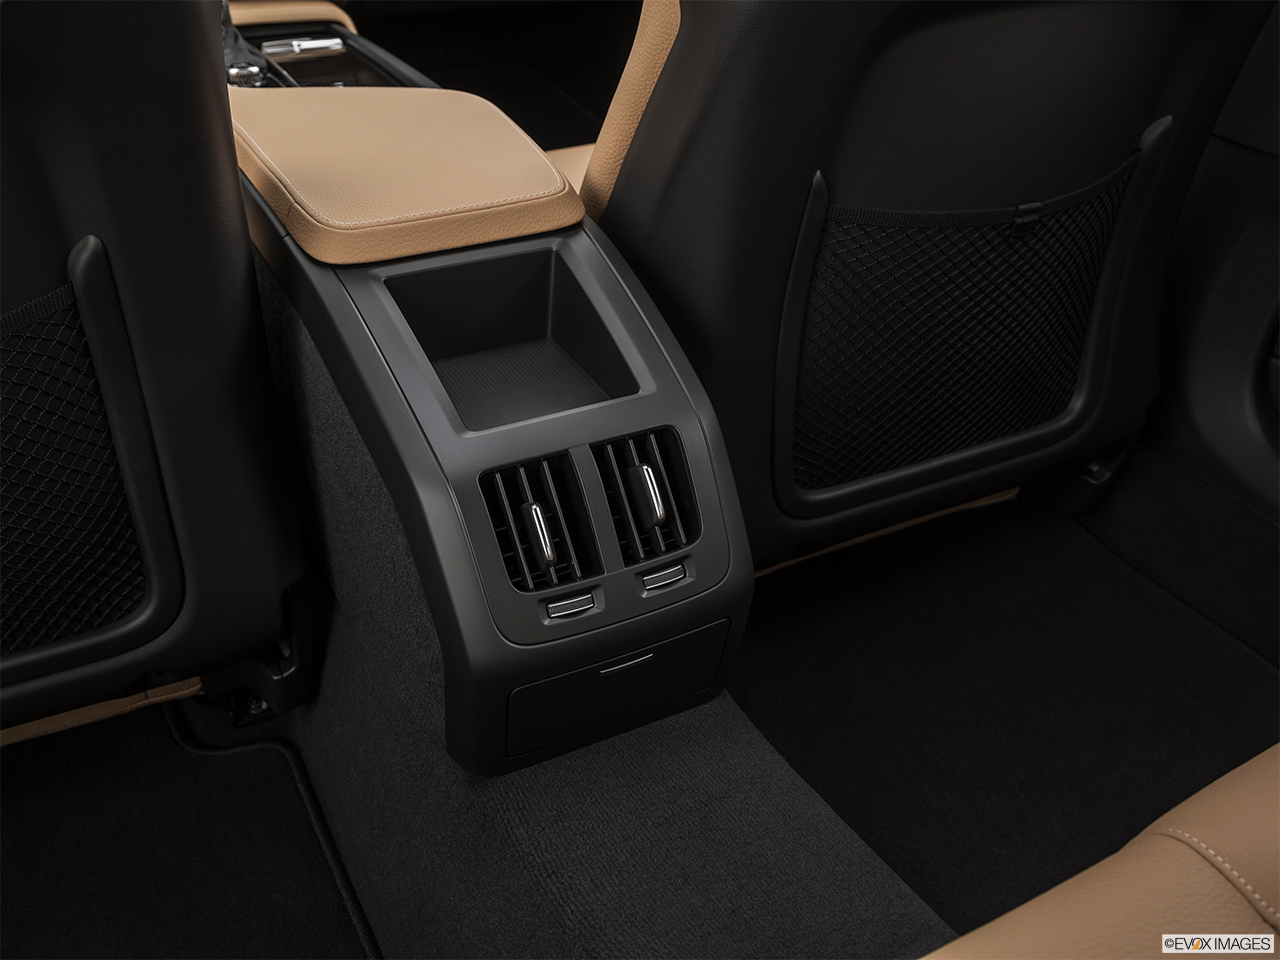 2019 Volvo S90 T5 Momentum Rear A/C controls. 